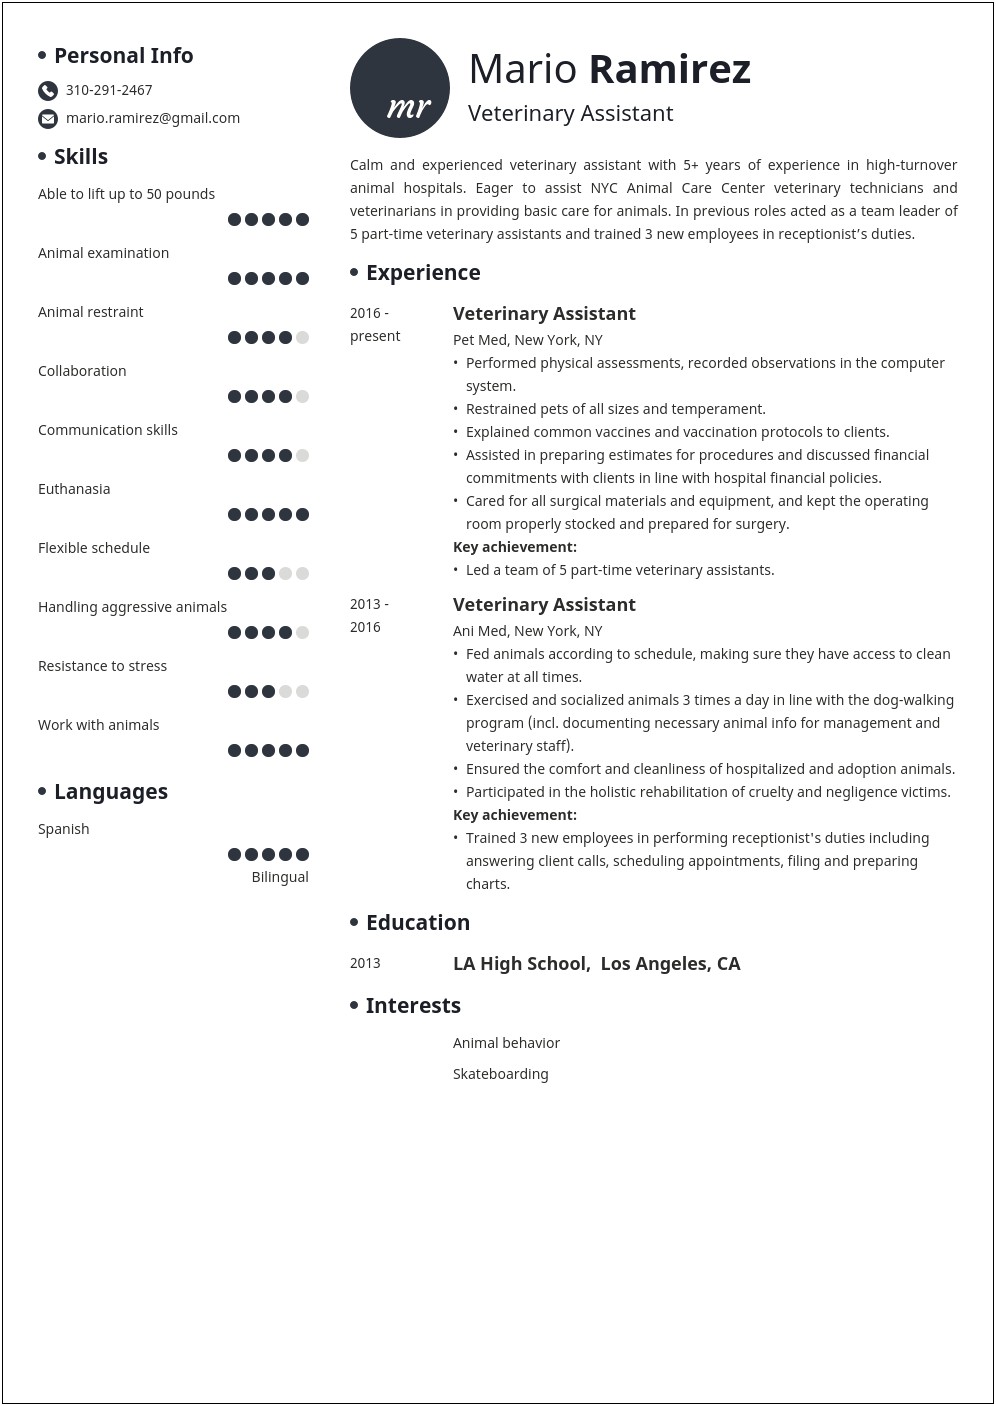 Veterinary Assistant Job Description For Resume